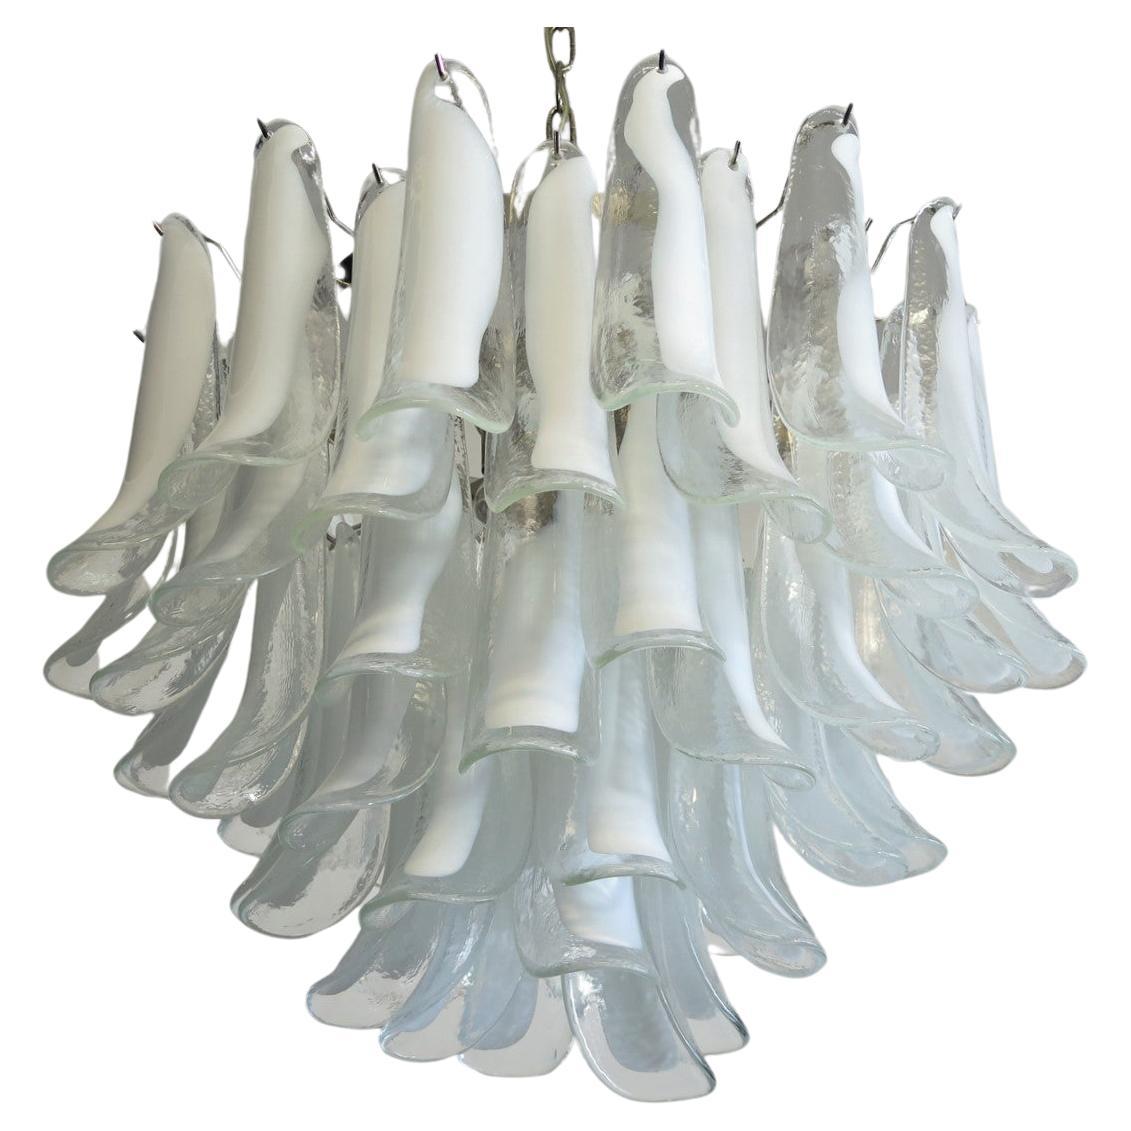 Italian vintage Murano chandelier - Mazzega - 53 tasparent lattimo glass petals For Sale